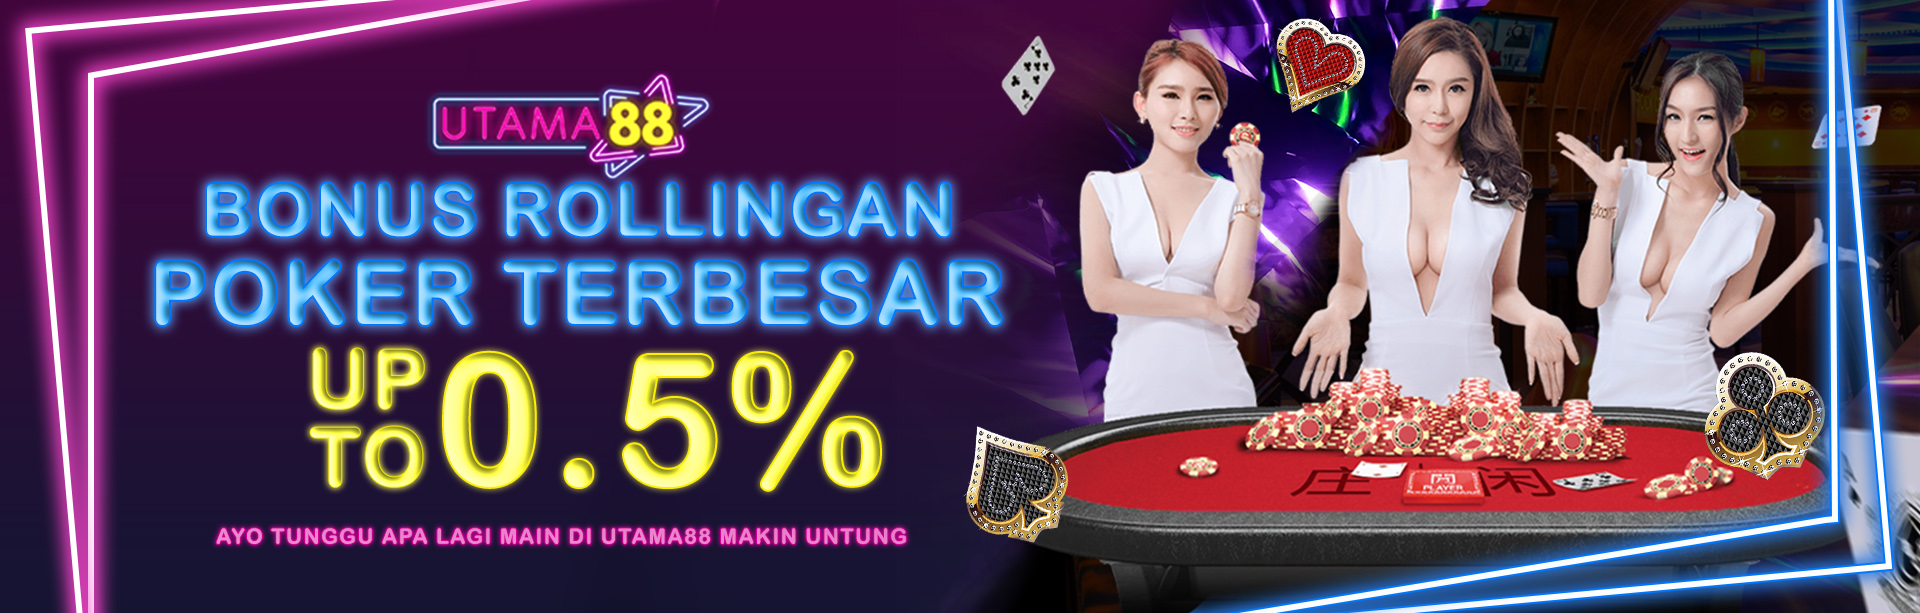 Bonus rollingan poker 0.5%